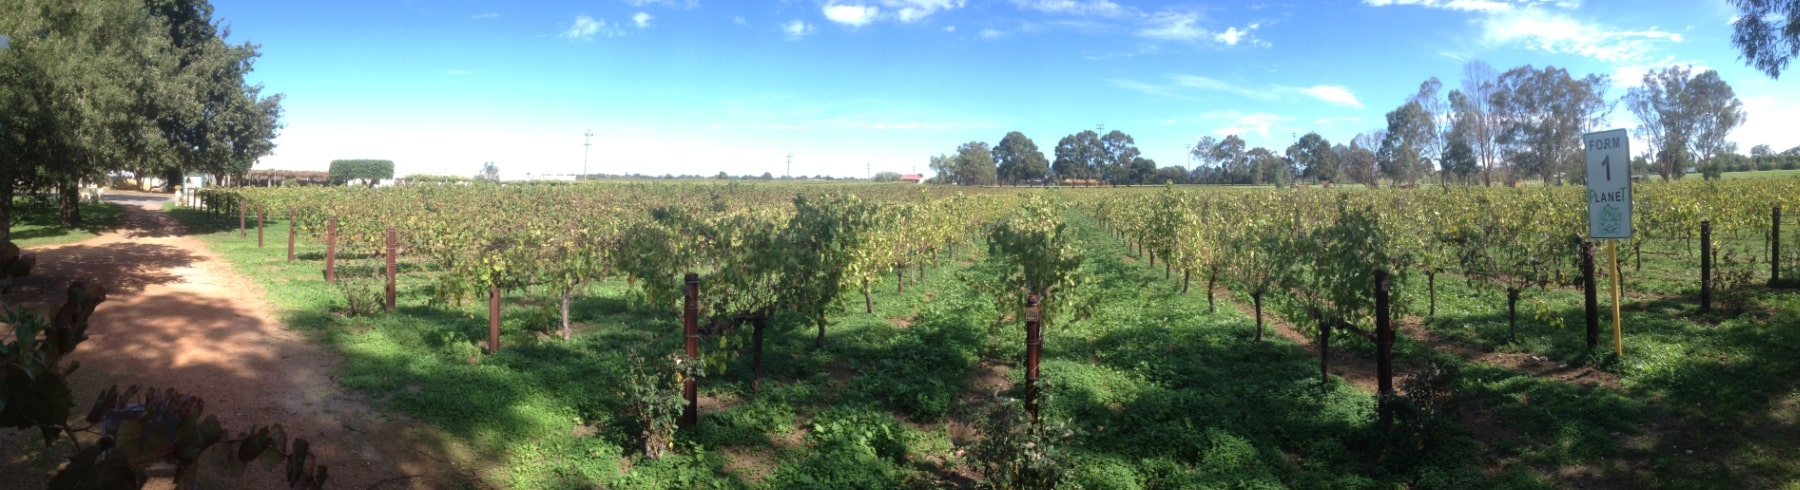 Organic Winery - Perth